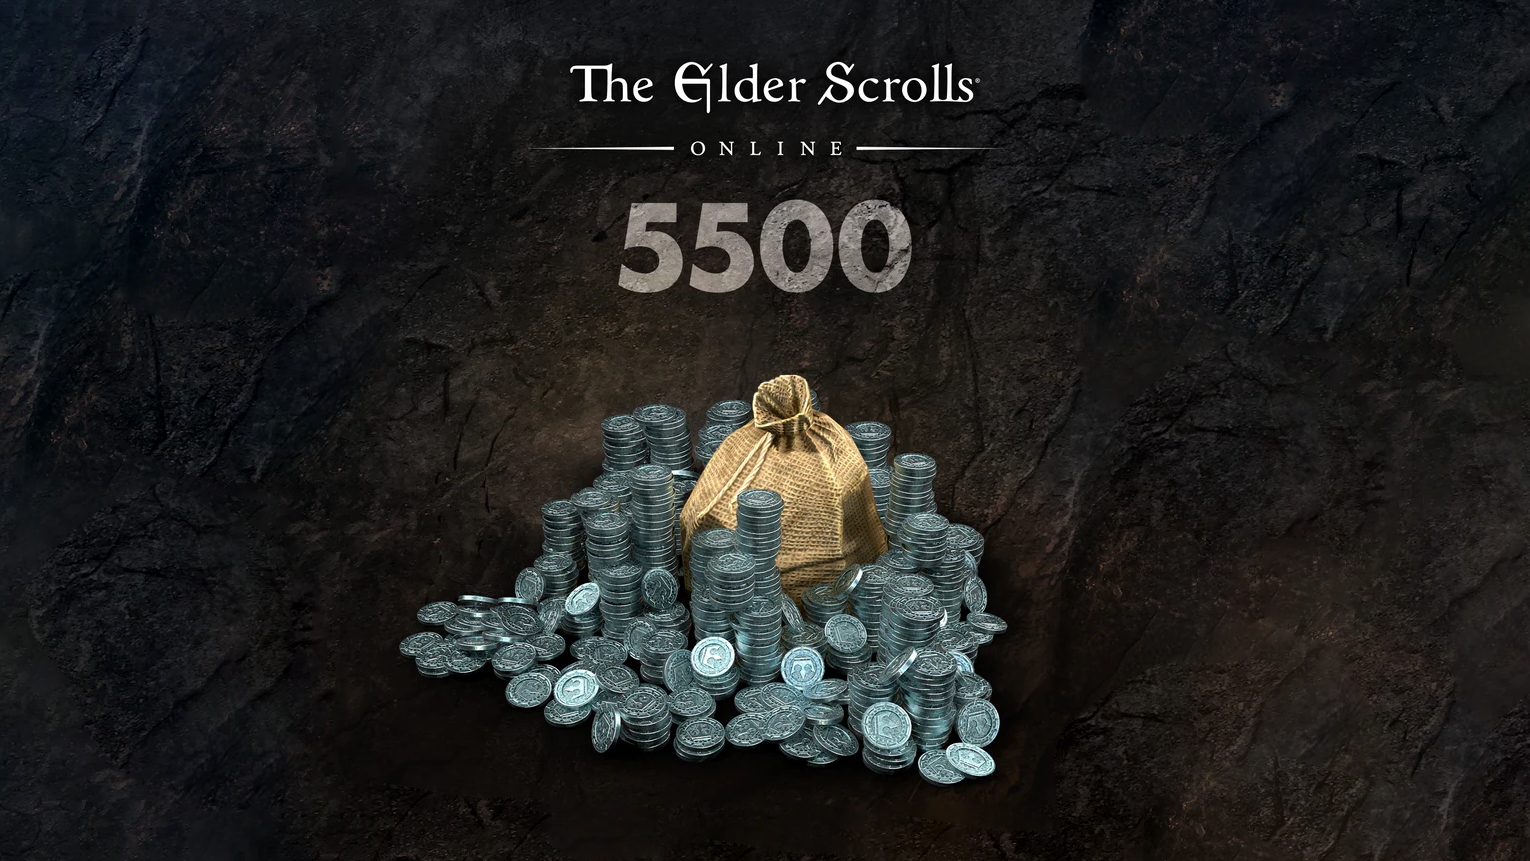 The Elder Scrolls Online: Tamriel Unlimited - 5500 Crowns XBOX One CD Key, $35.02